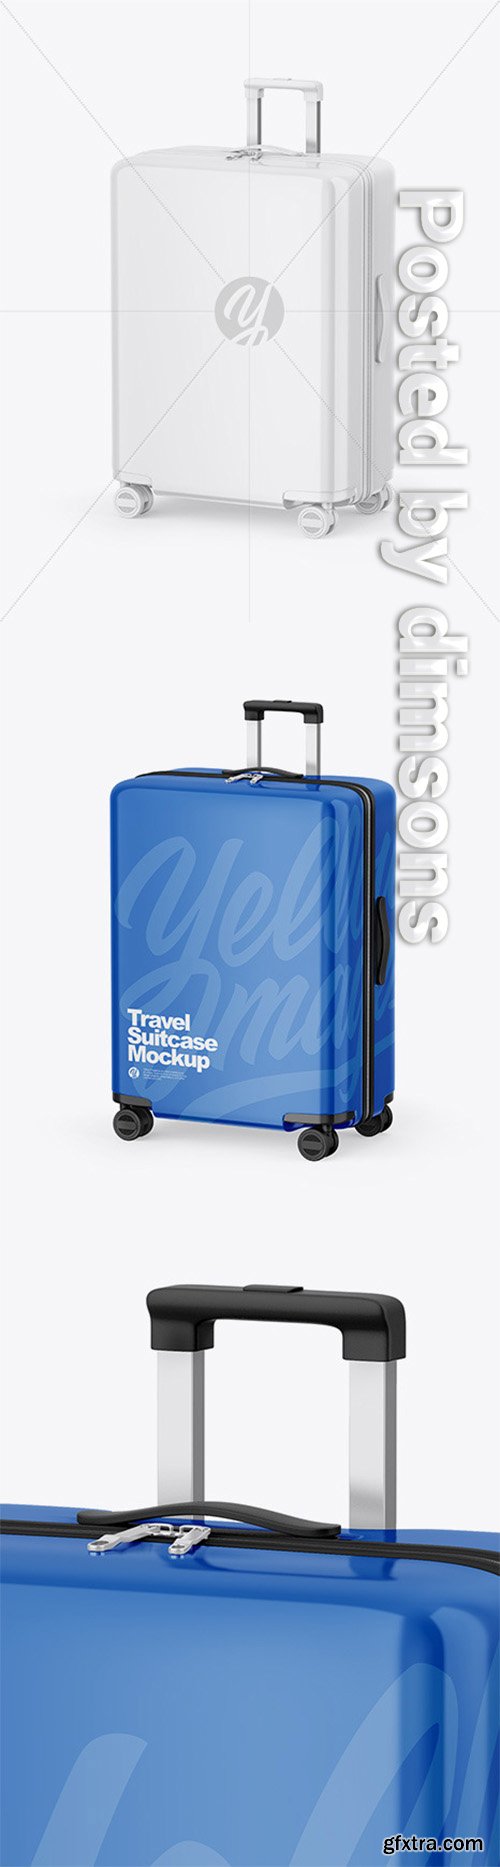 Glossy Travel Suitcase Mockup 65014